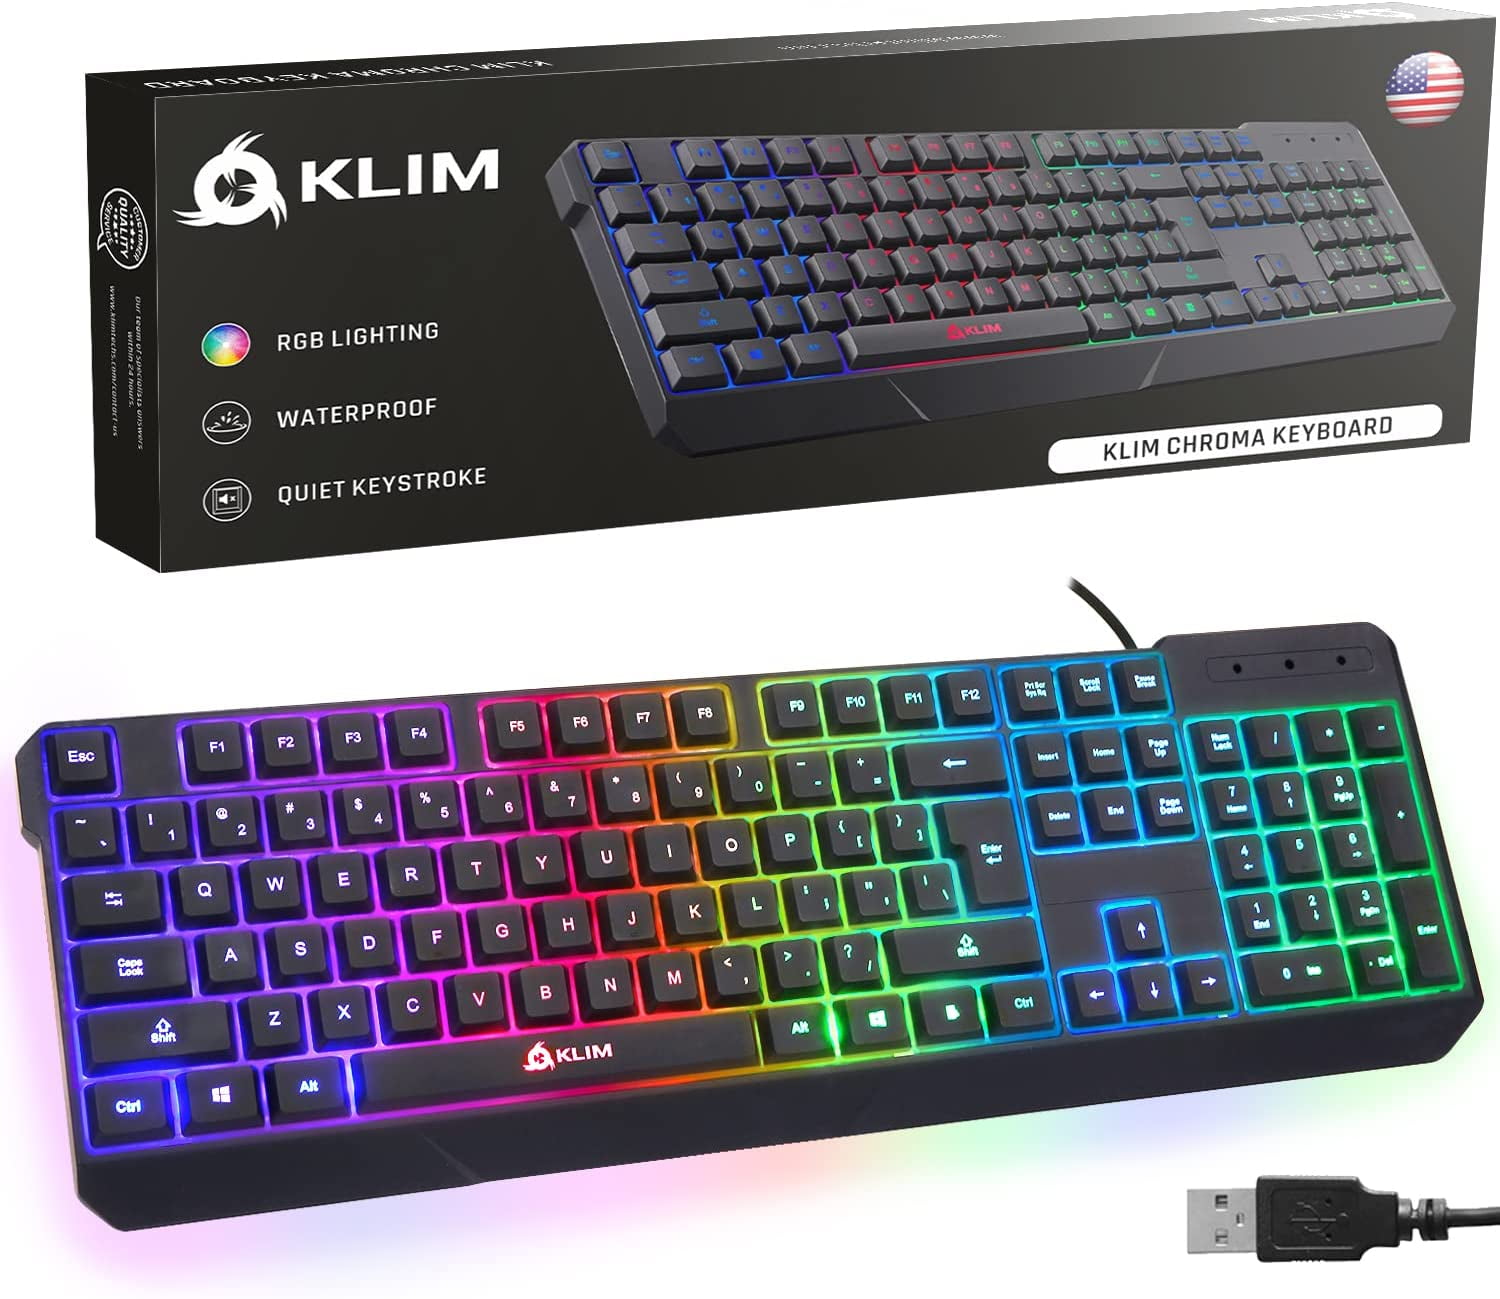 Levere bøf Regnskab KLIM Chroma Gaming Keyboard, Wired USB, Durable, Waterproof, Silent, 2ms Response  Time, Illuminated Backlit Keyboard for PC Mac PS4 - Walmart.com